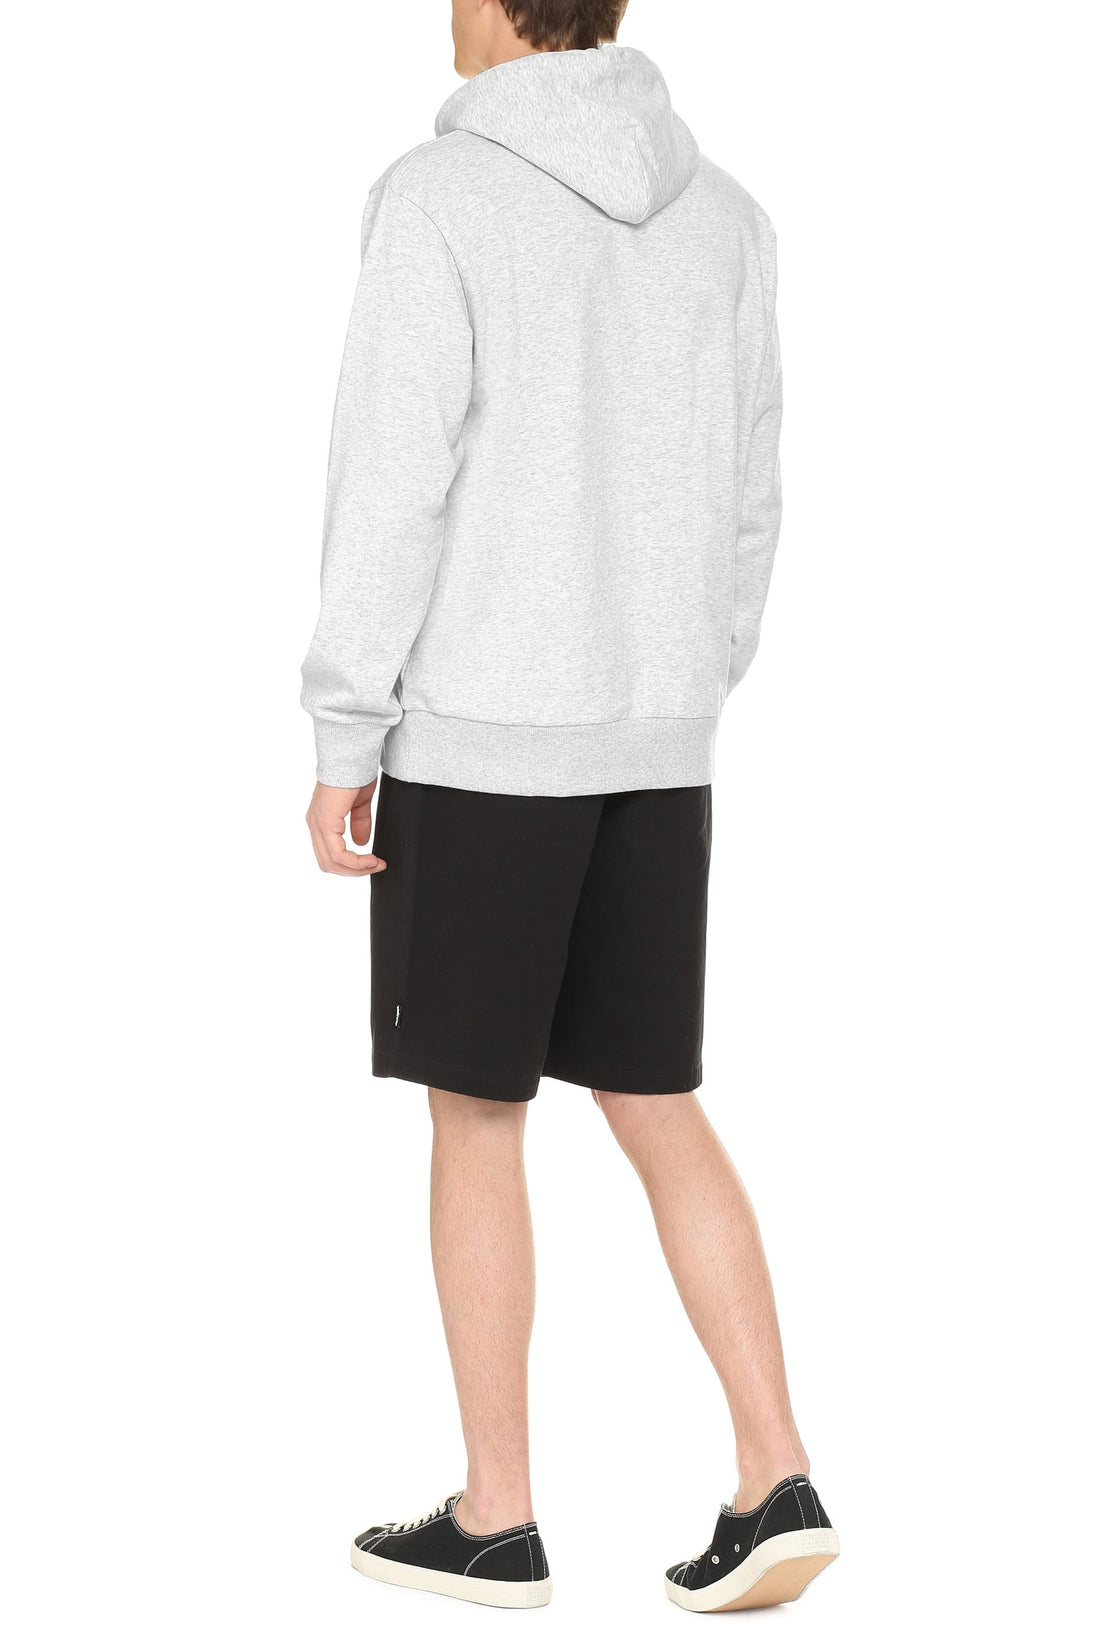 Carhartt-OUTLET-SALE-Hooded sweatshirt-ARCHIVIST